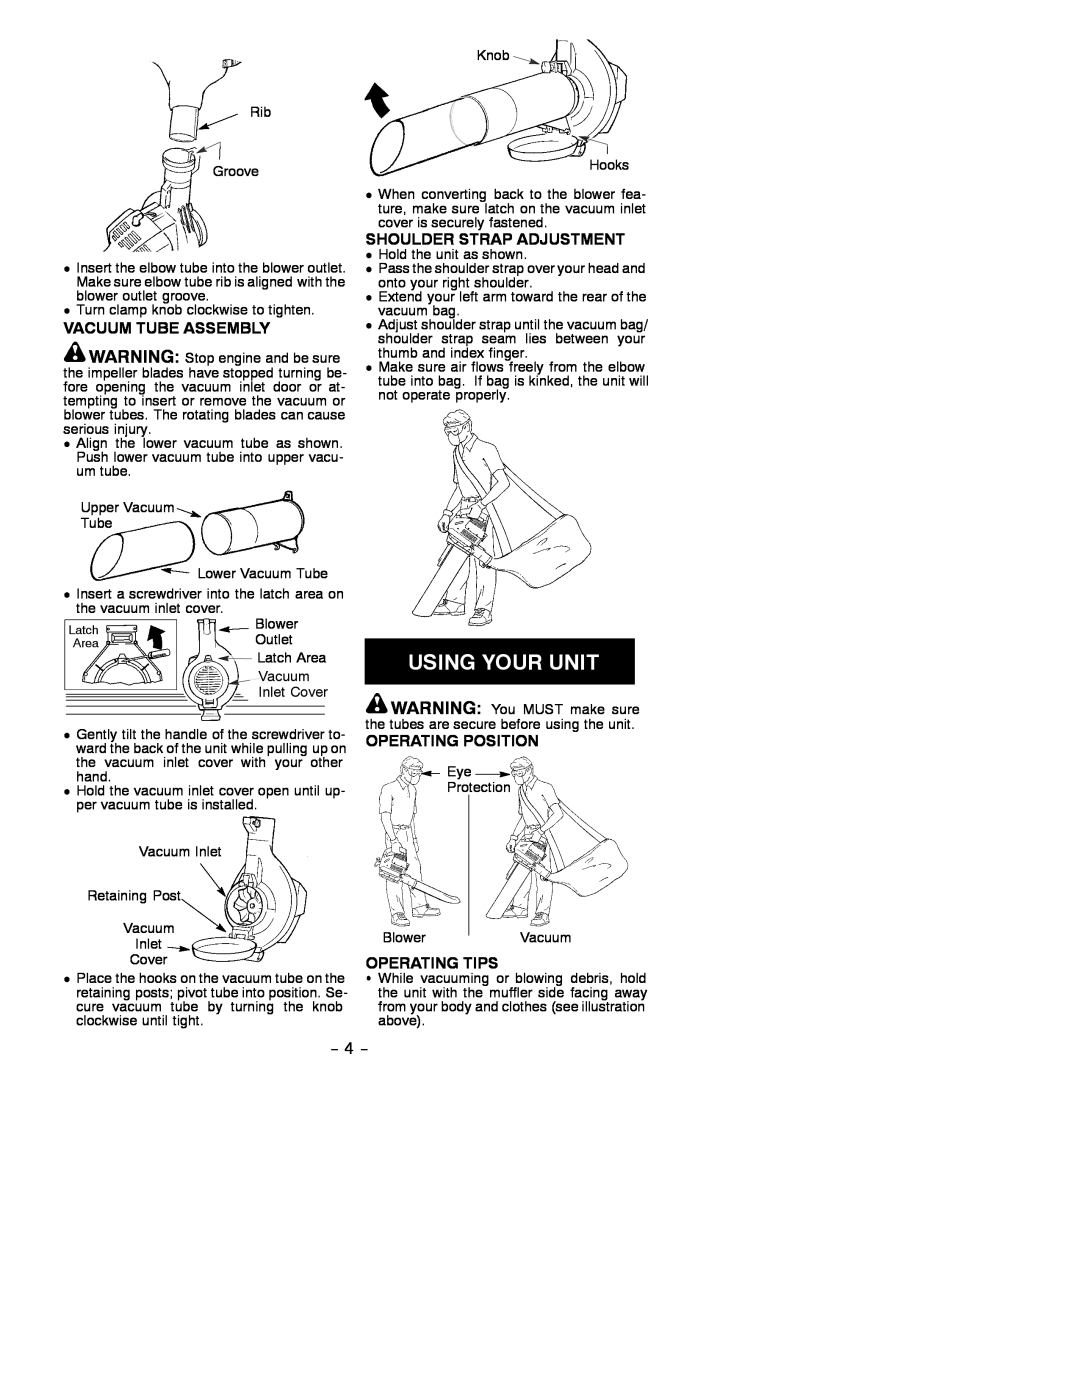 Poulan 530086848 instruction manual Vacuum Tube Assembly, Shoulder Strap Adjustment, Operating Position, Operating Tips 